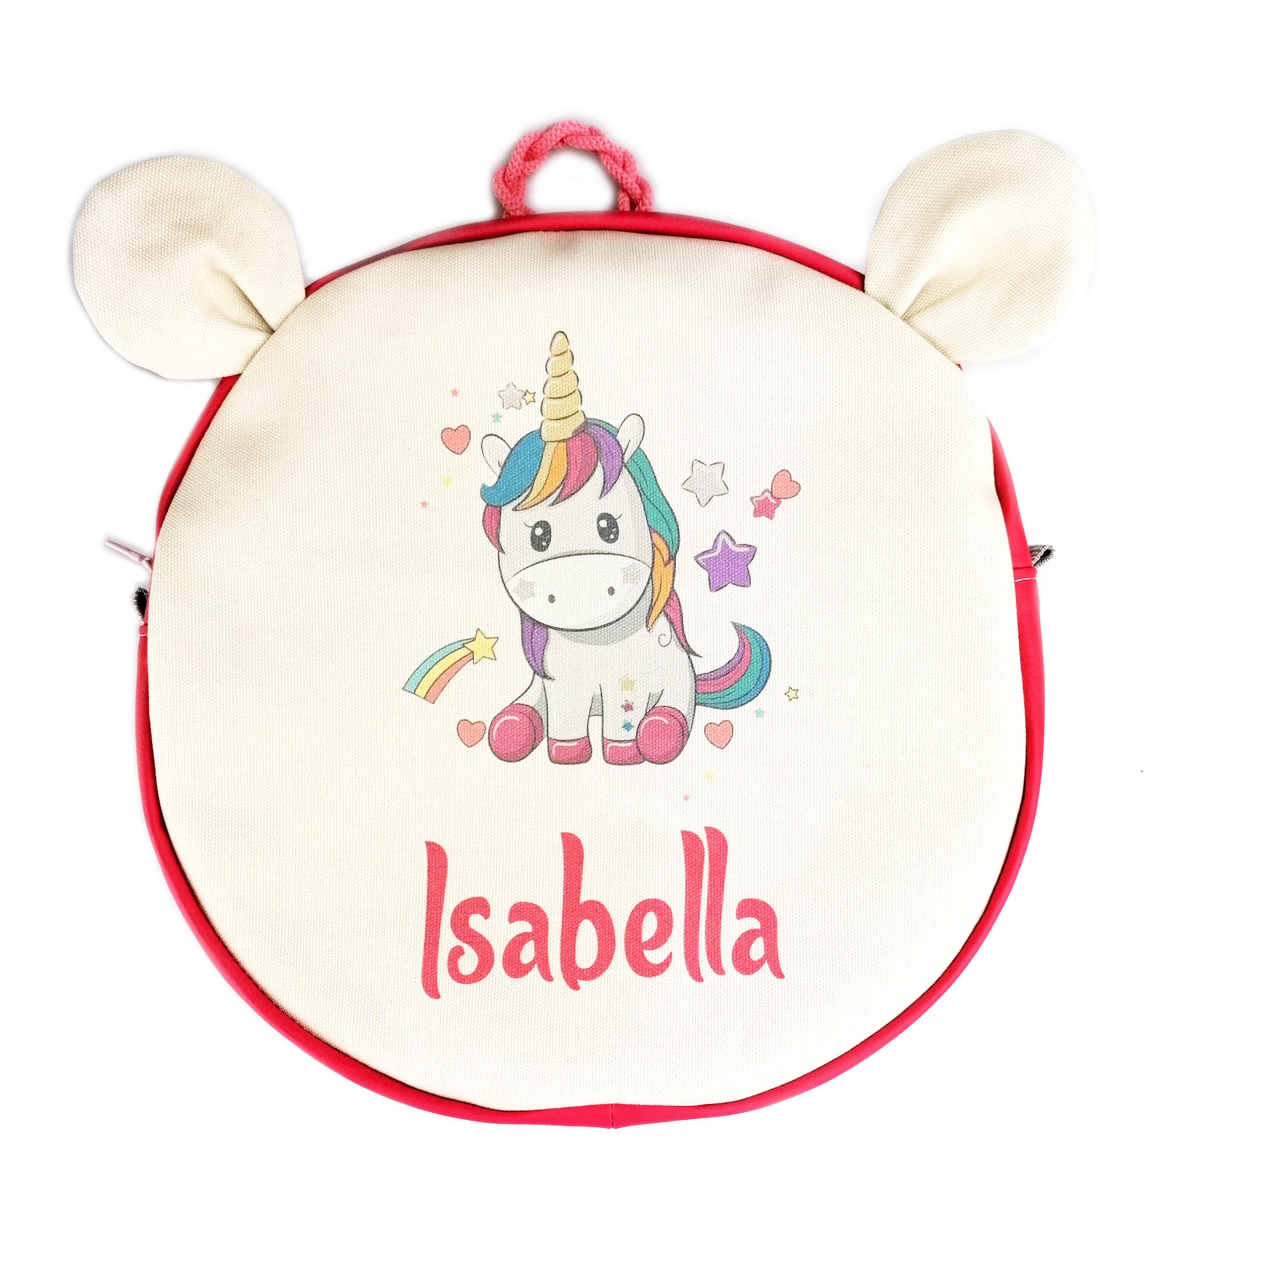 Zainetto Bambina – Ball Bag Unicorno